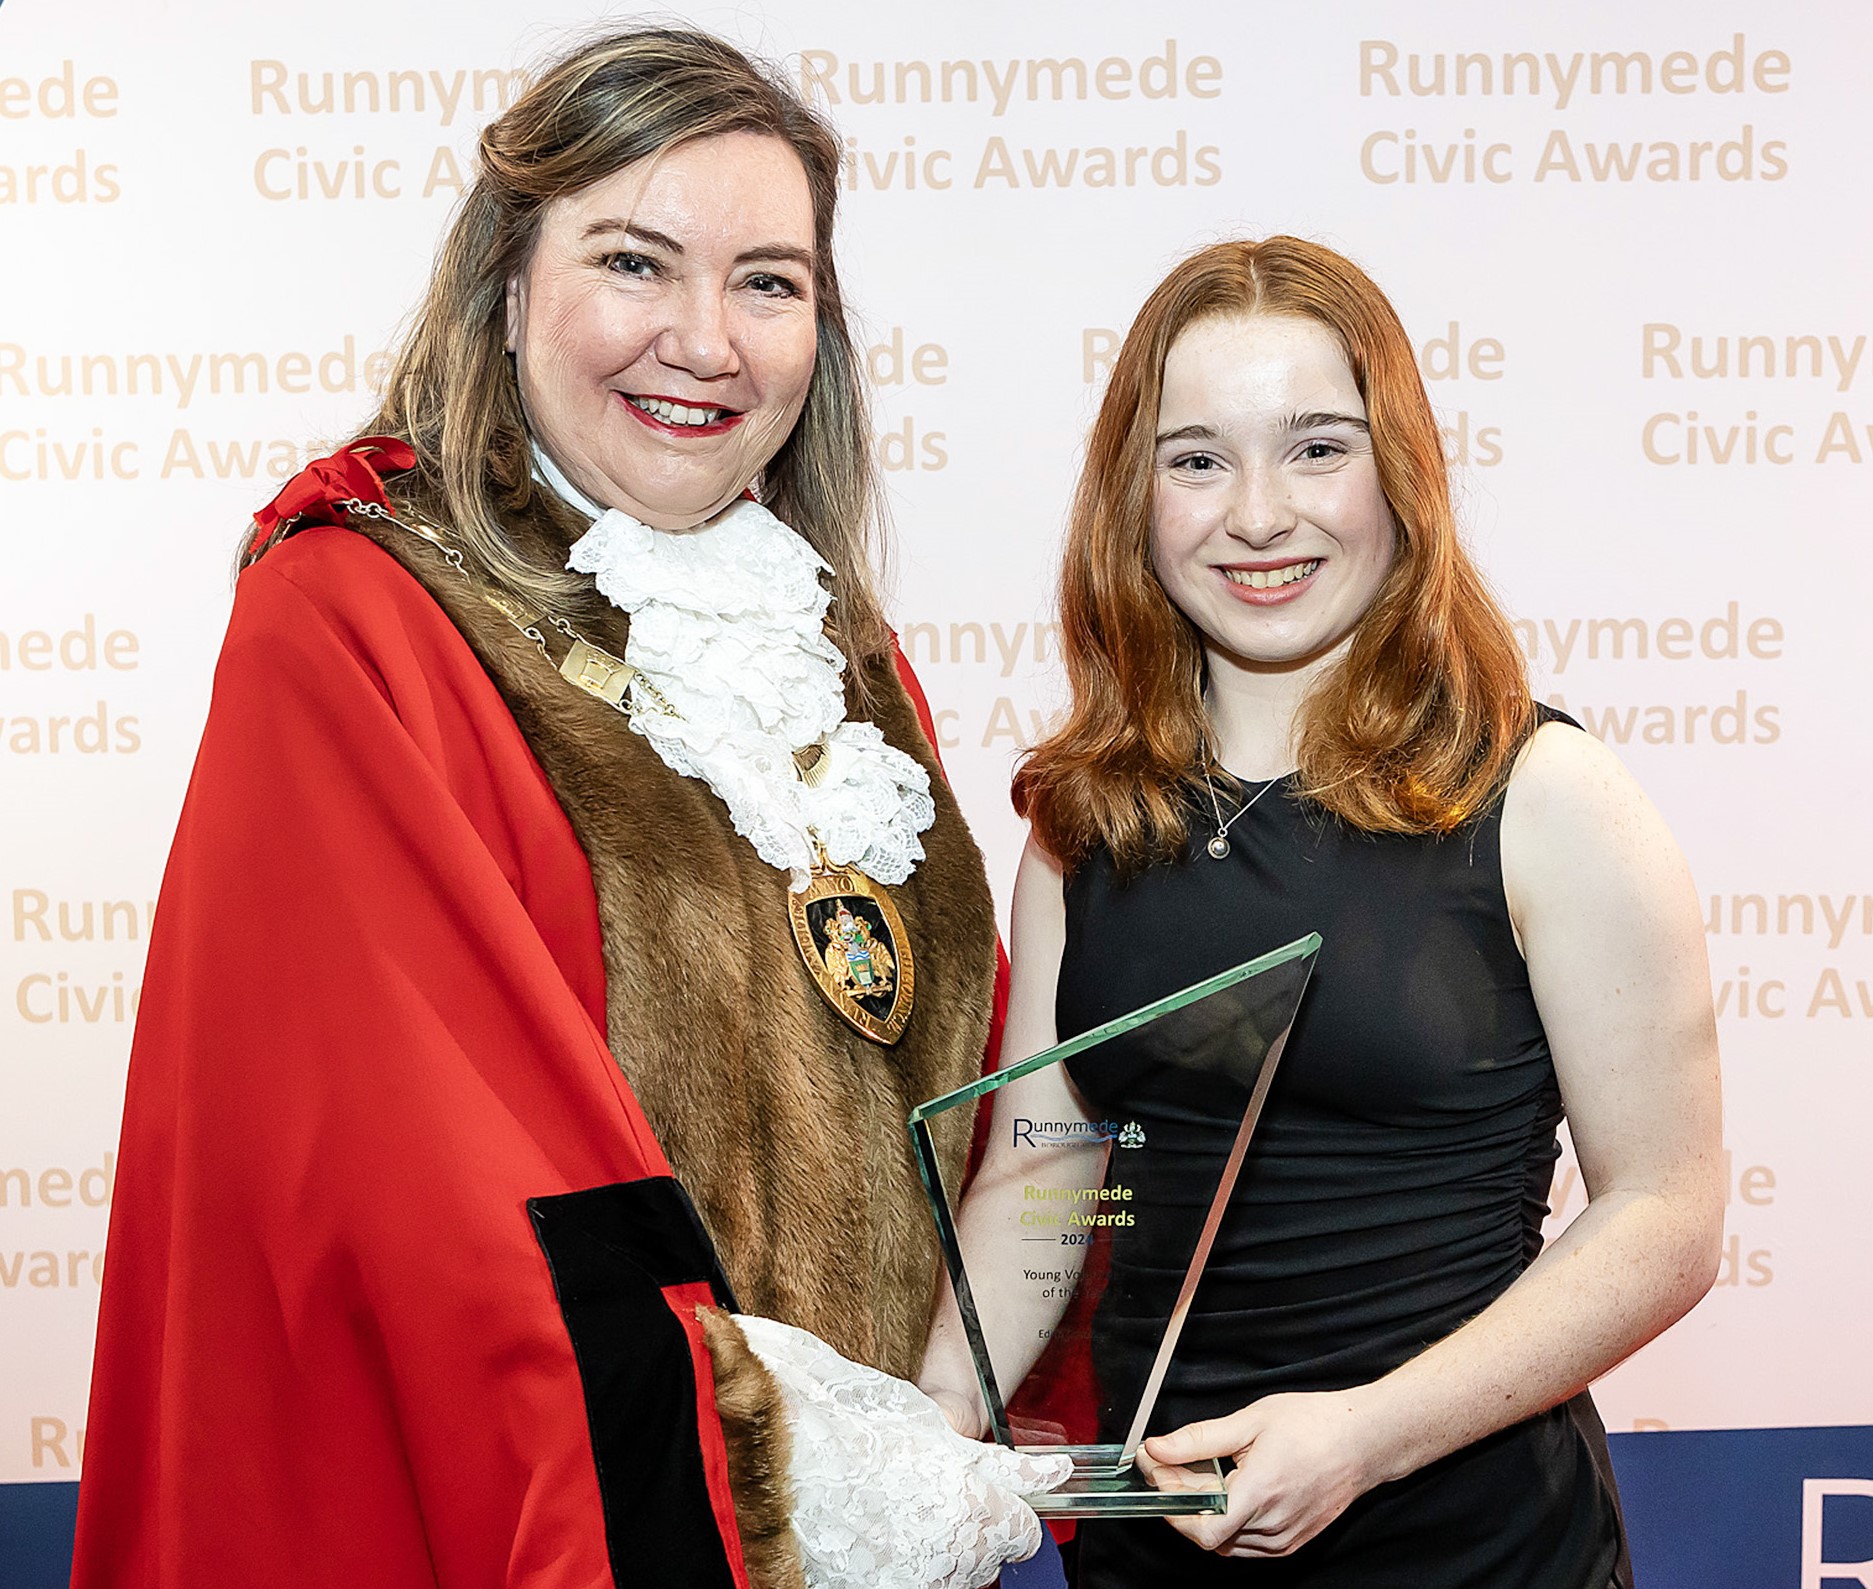 A young woman receives an award.